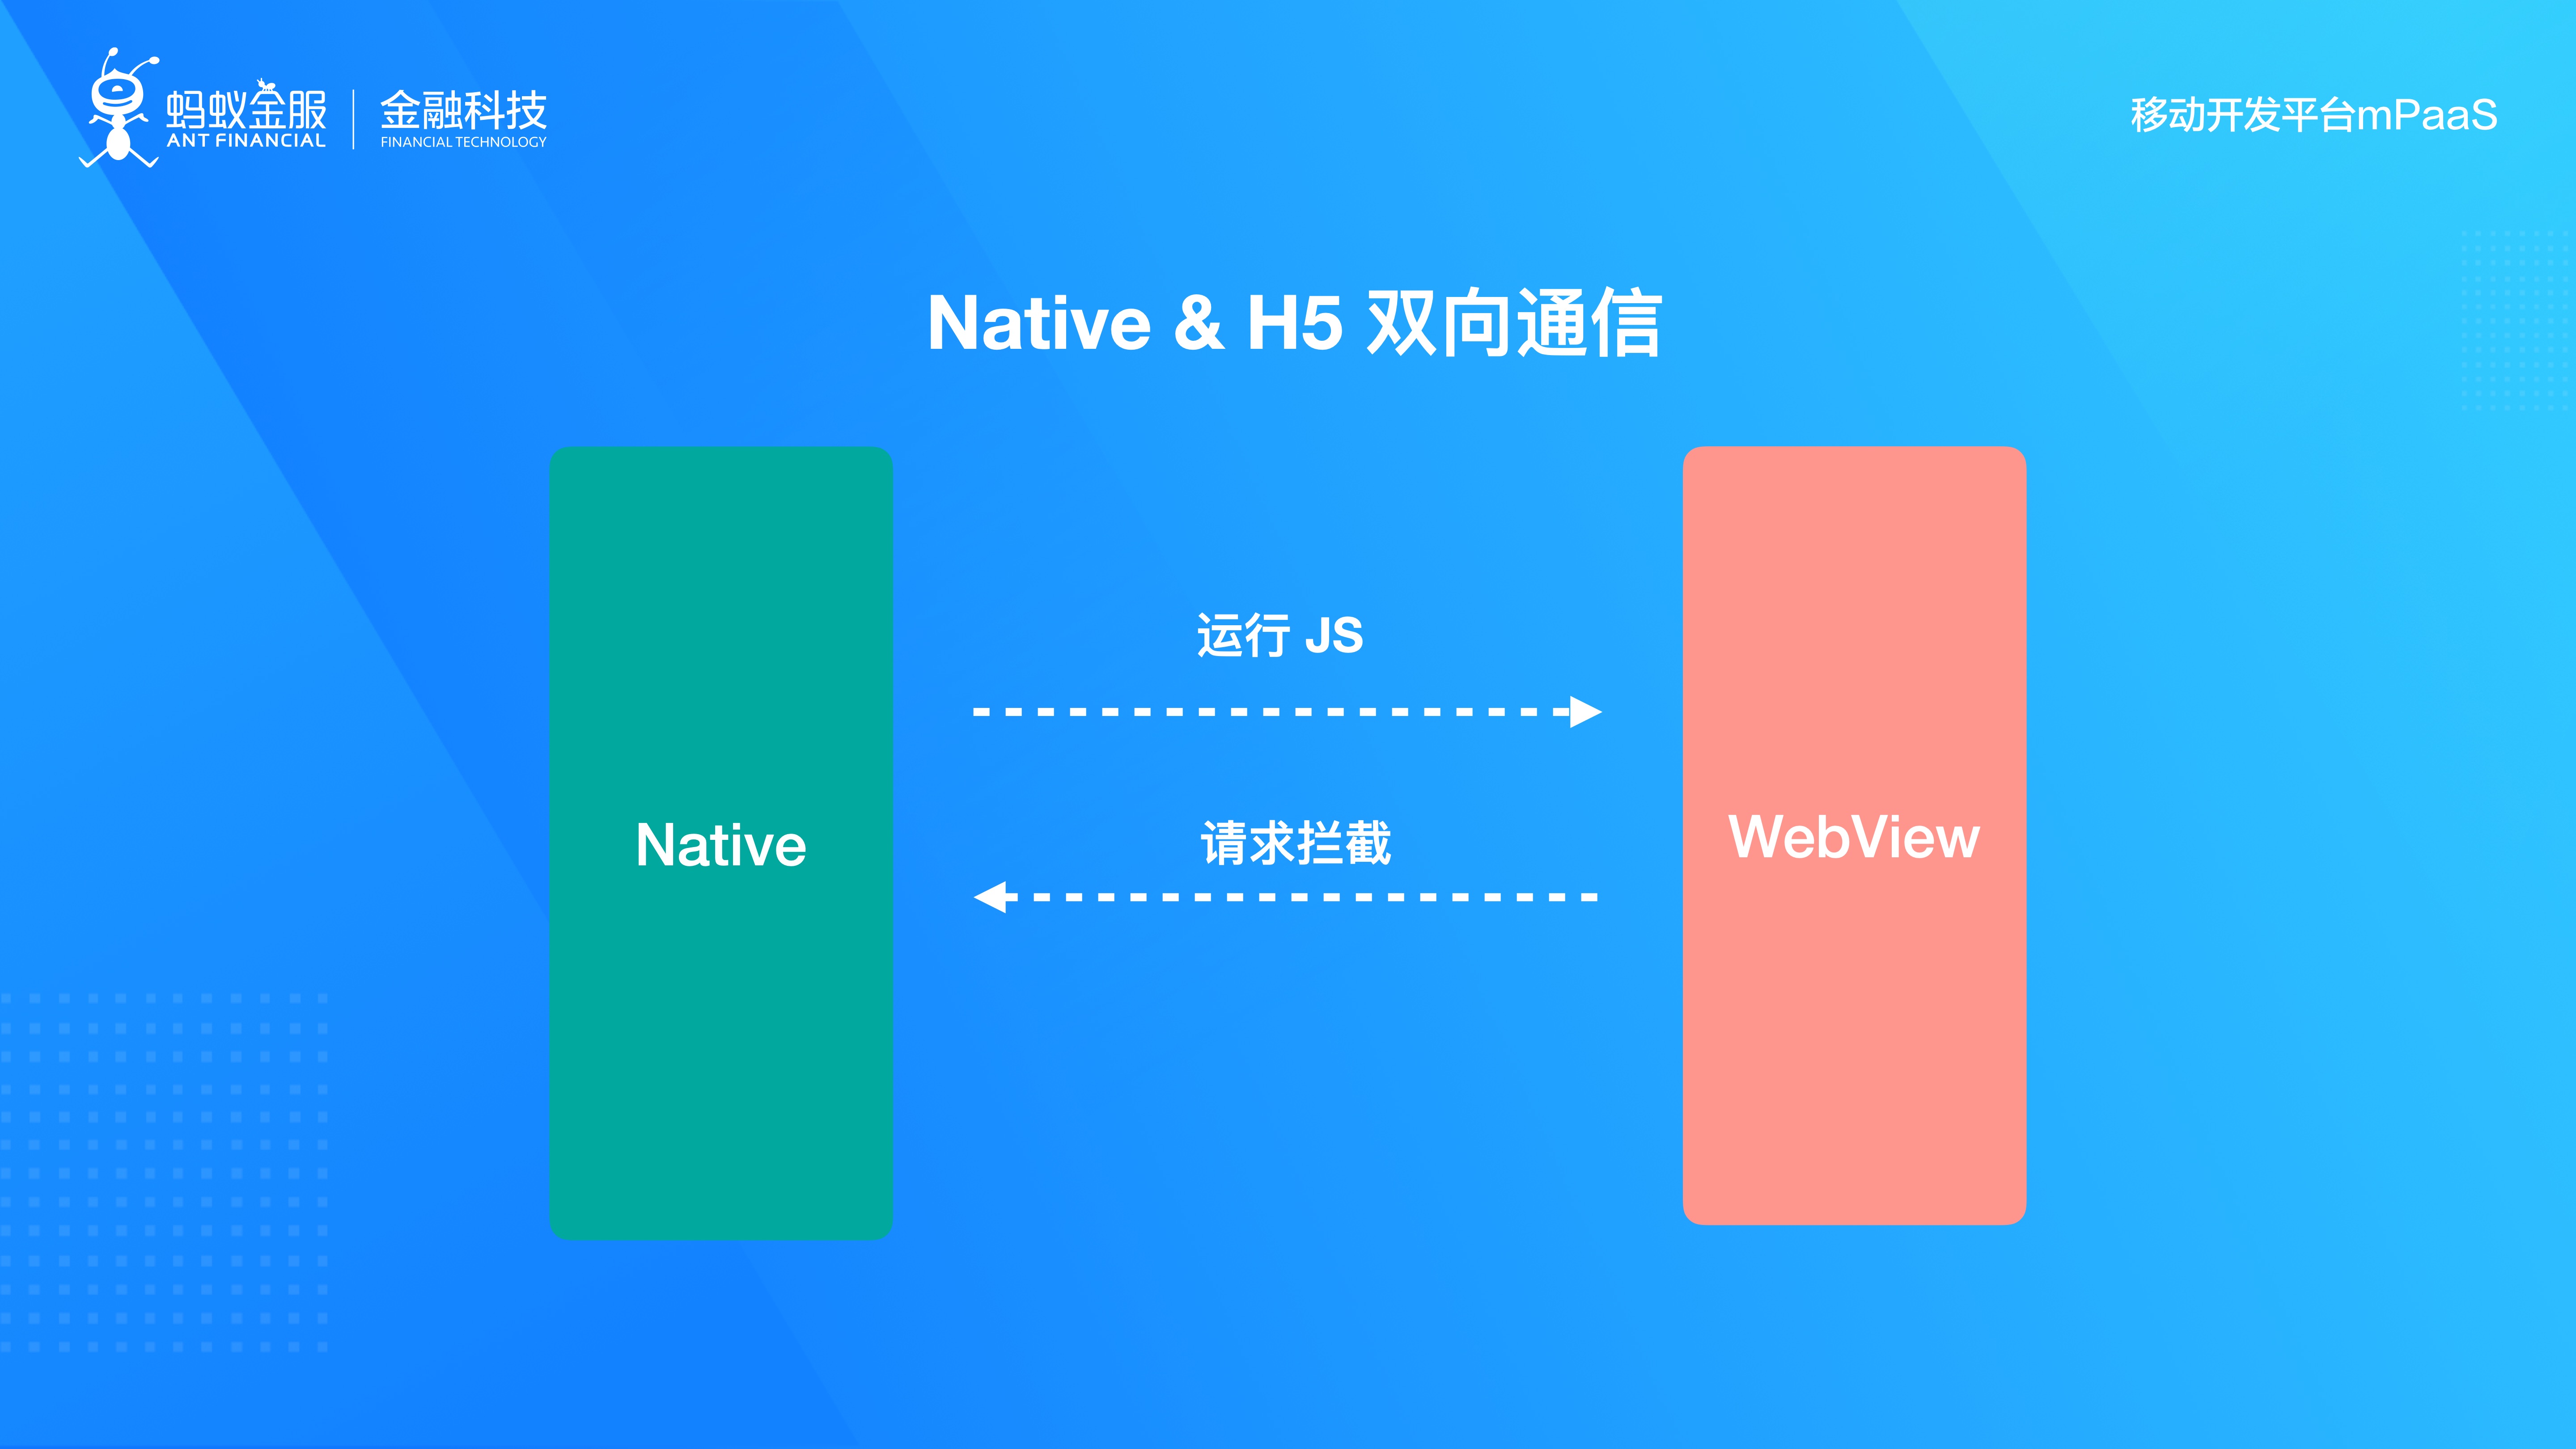 Native _ H5 双向通信.jpg